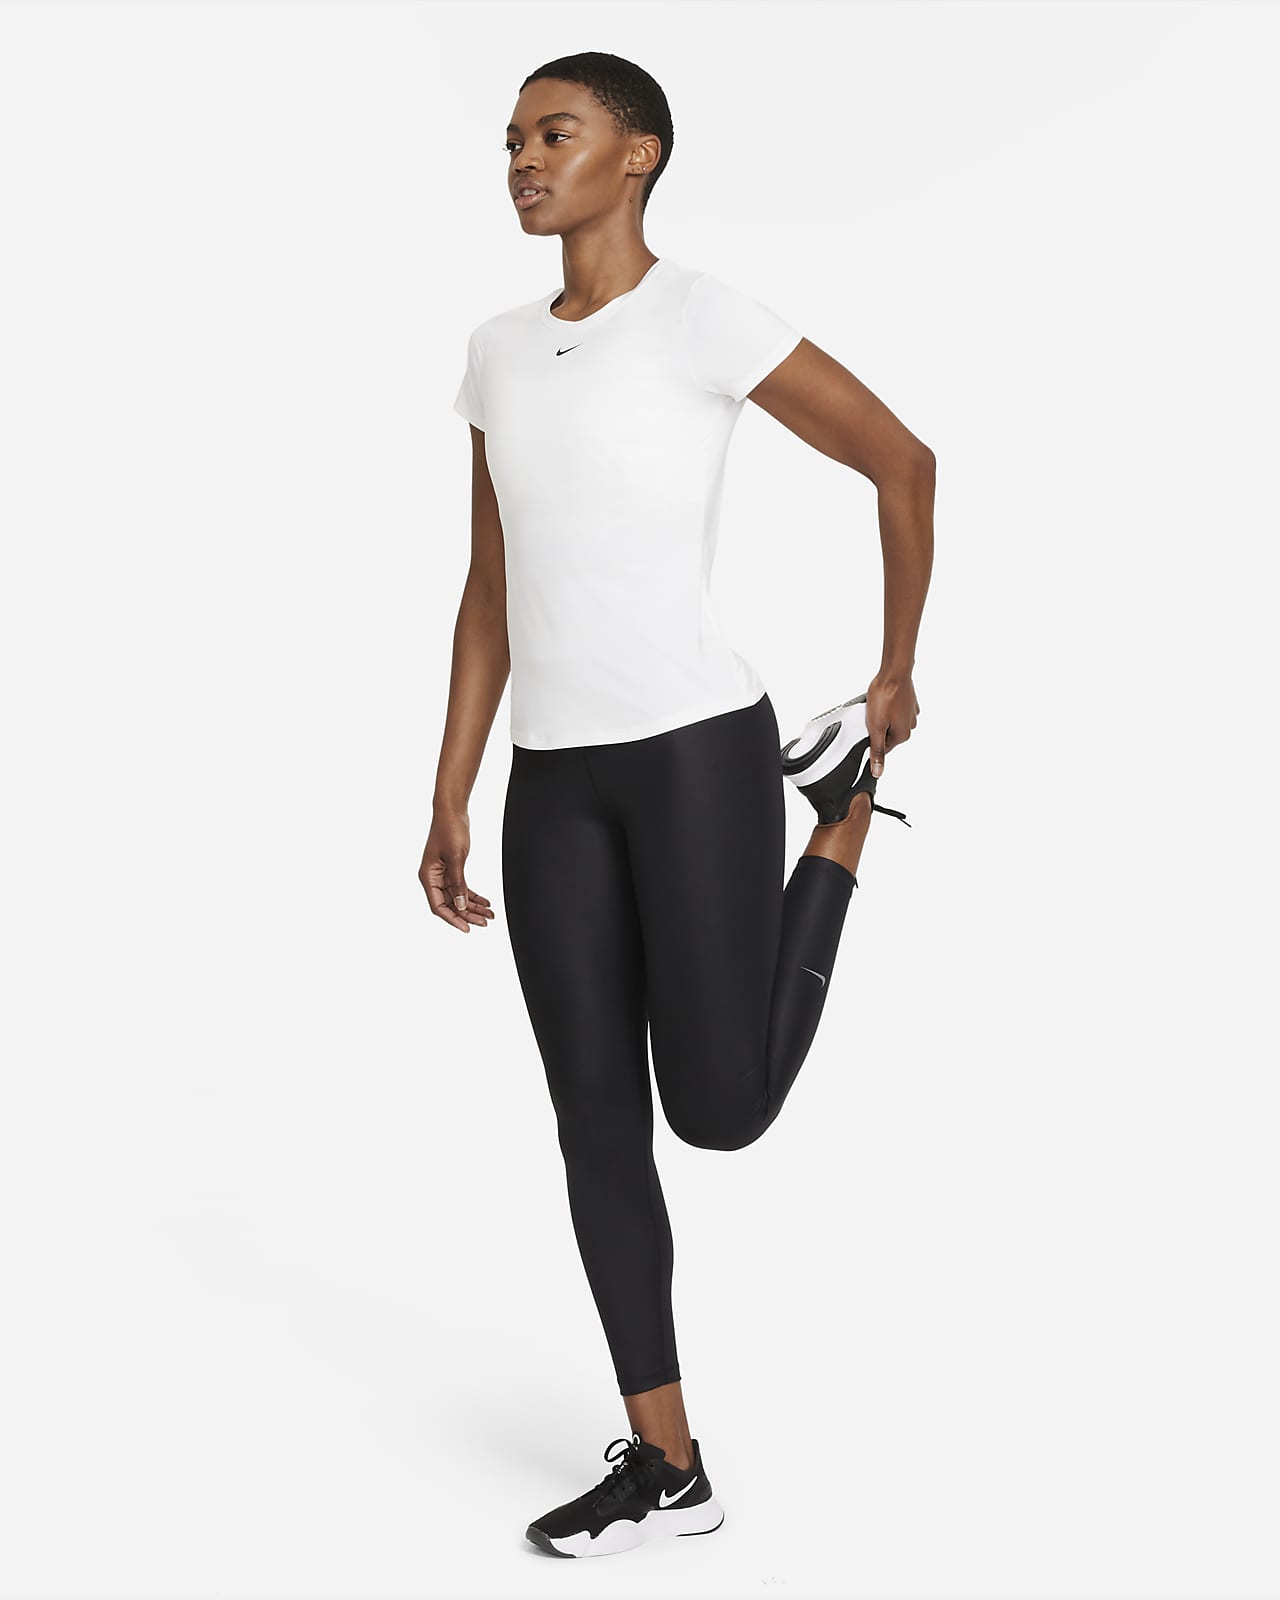 Nike Dri-FIT Women's Slim-Fit Short-Sleeve Top. Nike LU